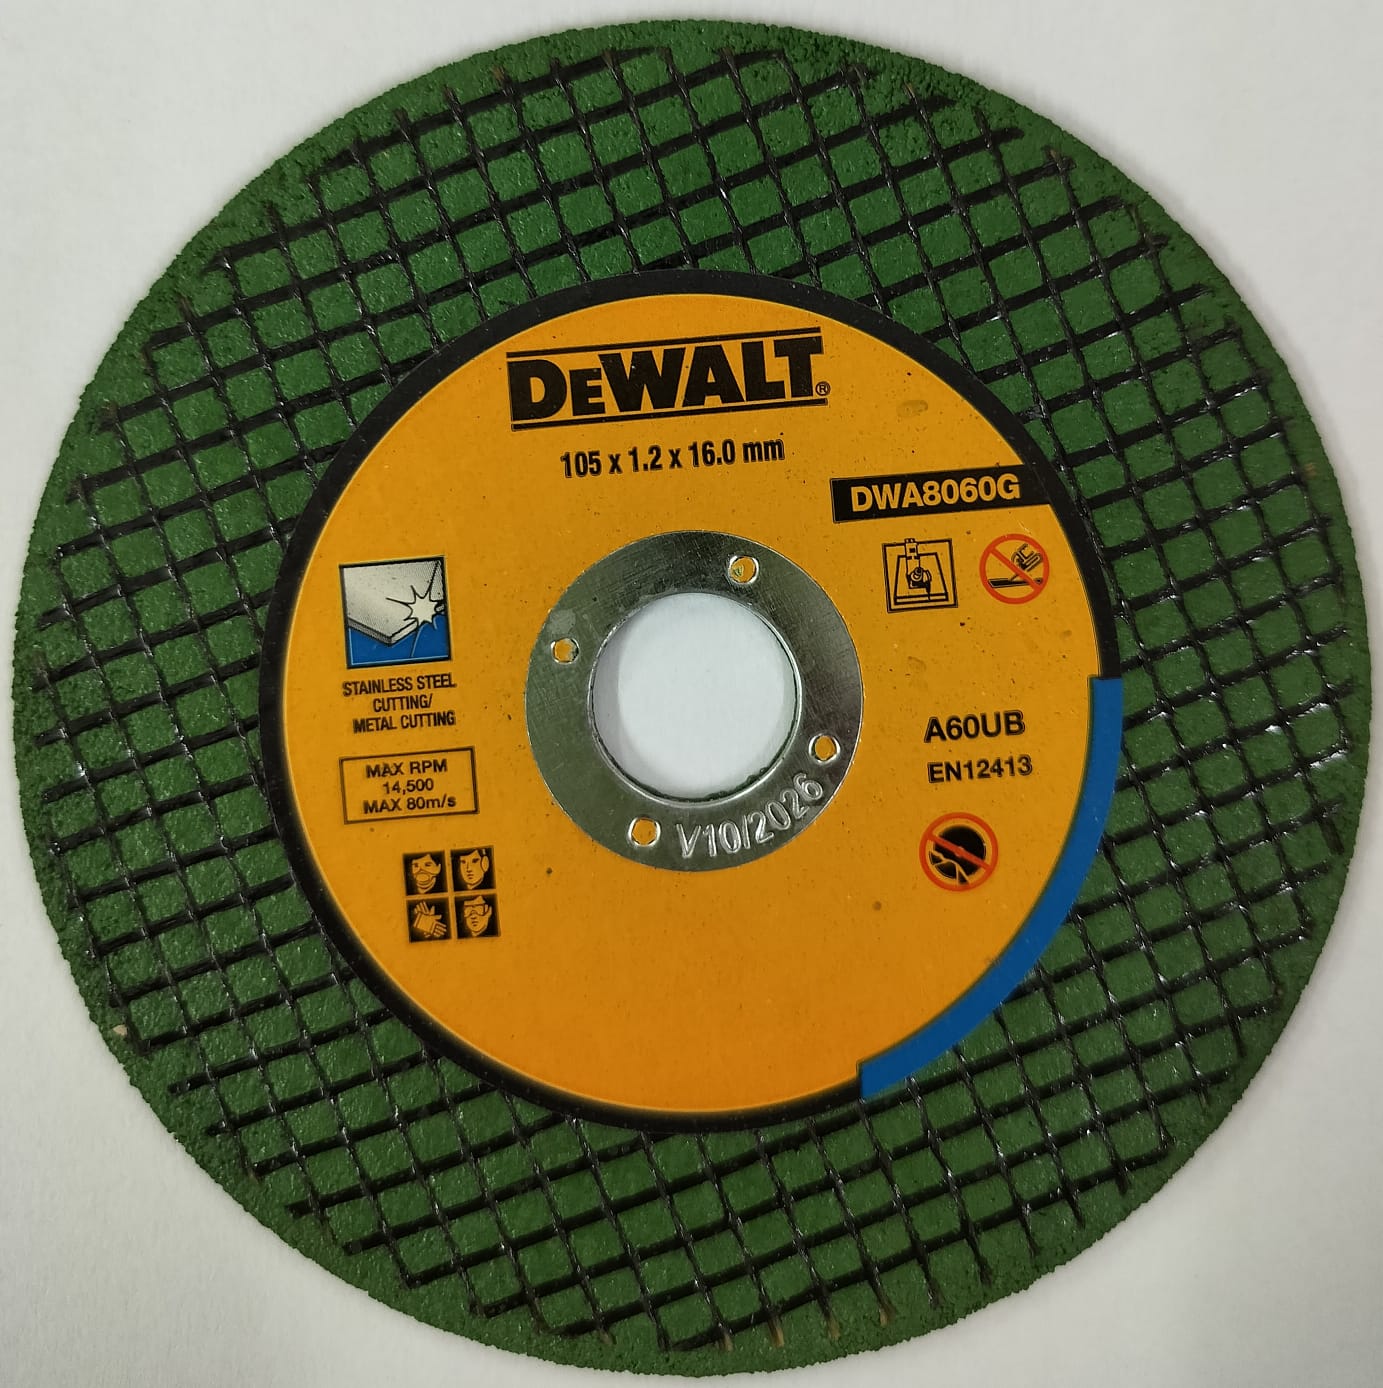 DEWALT DWA8060G 4 inch Cut Off Wheel - Pack of 50 Pcs